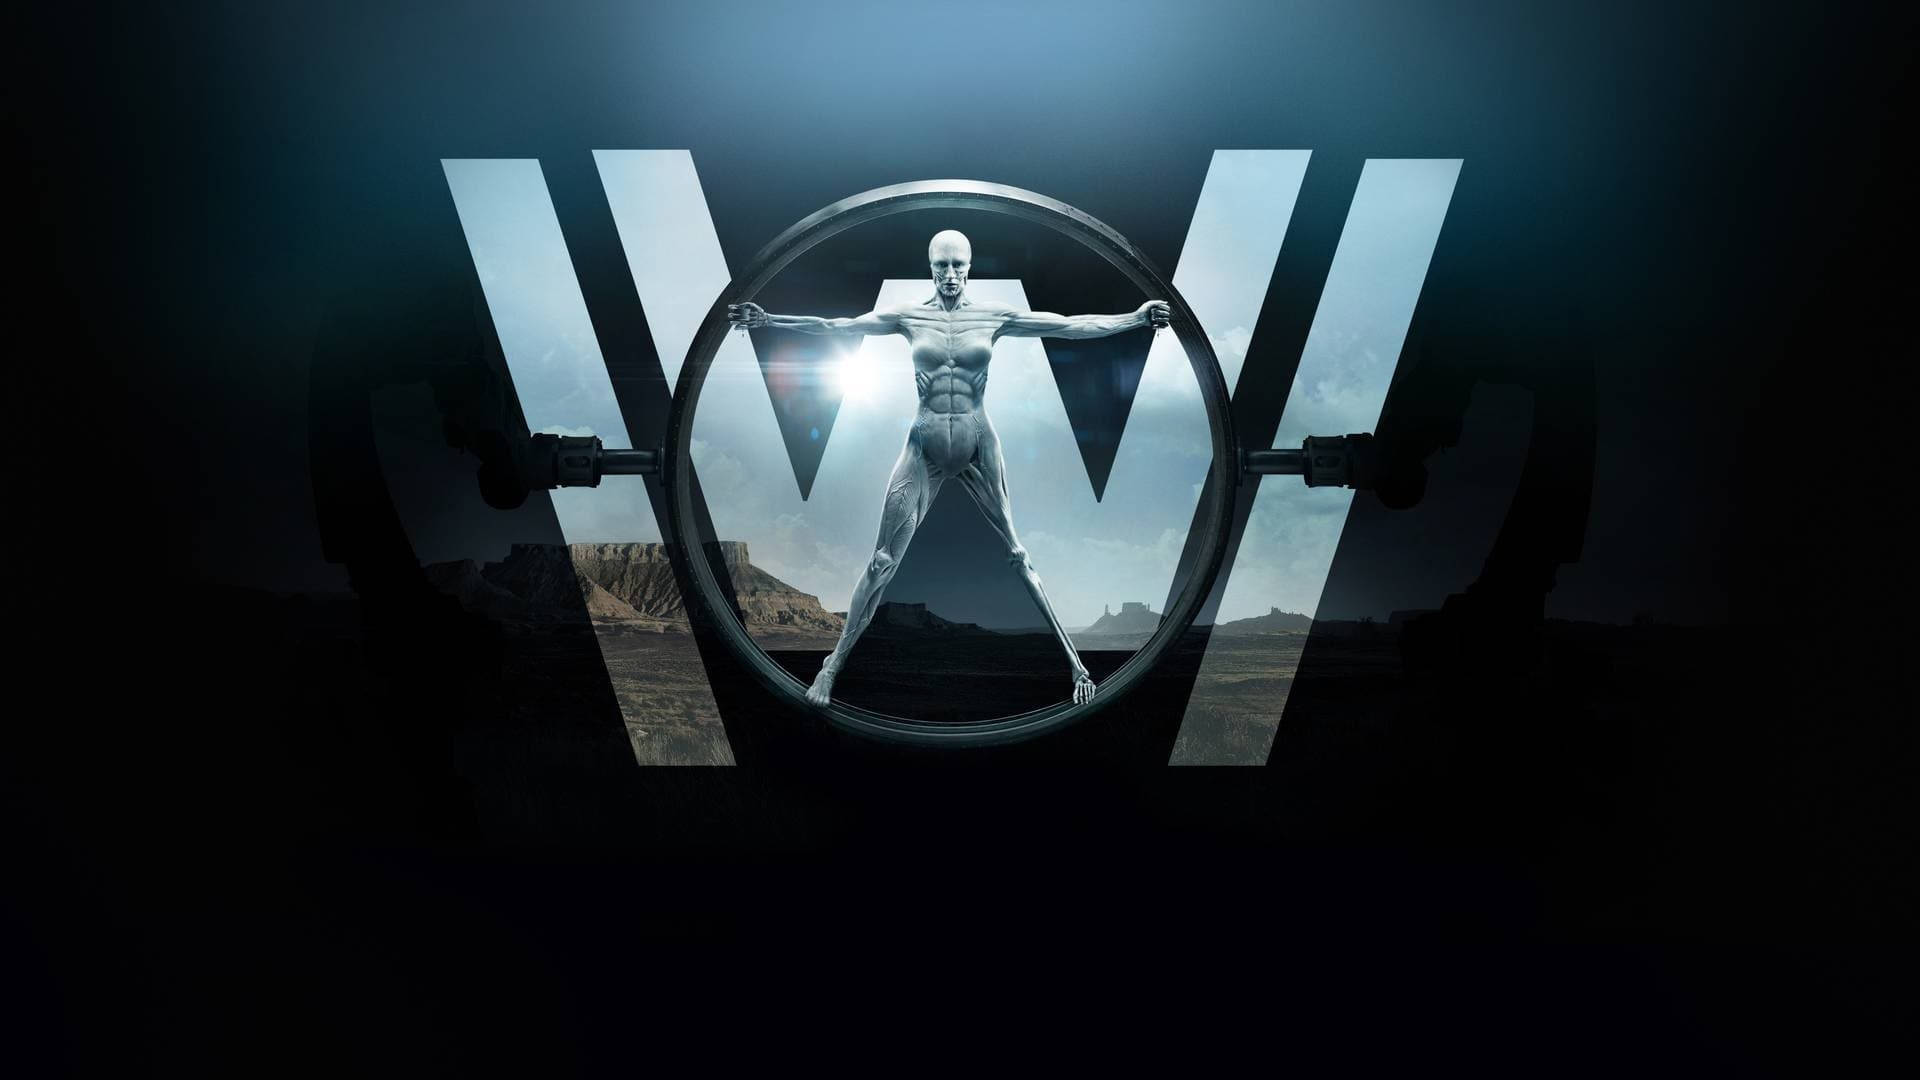 Human Sculpture Of Westworld Background